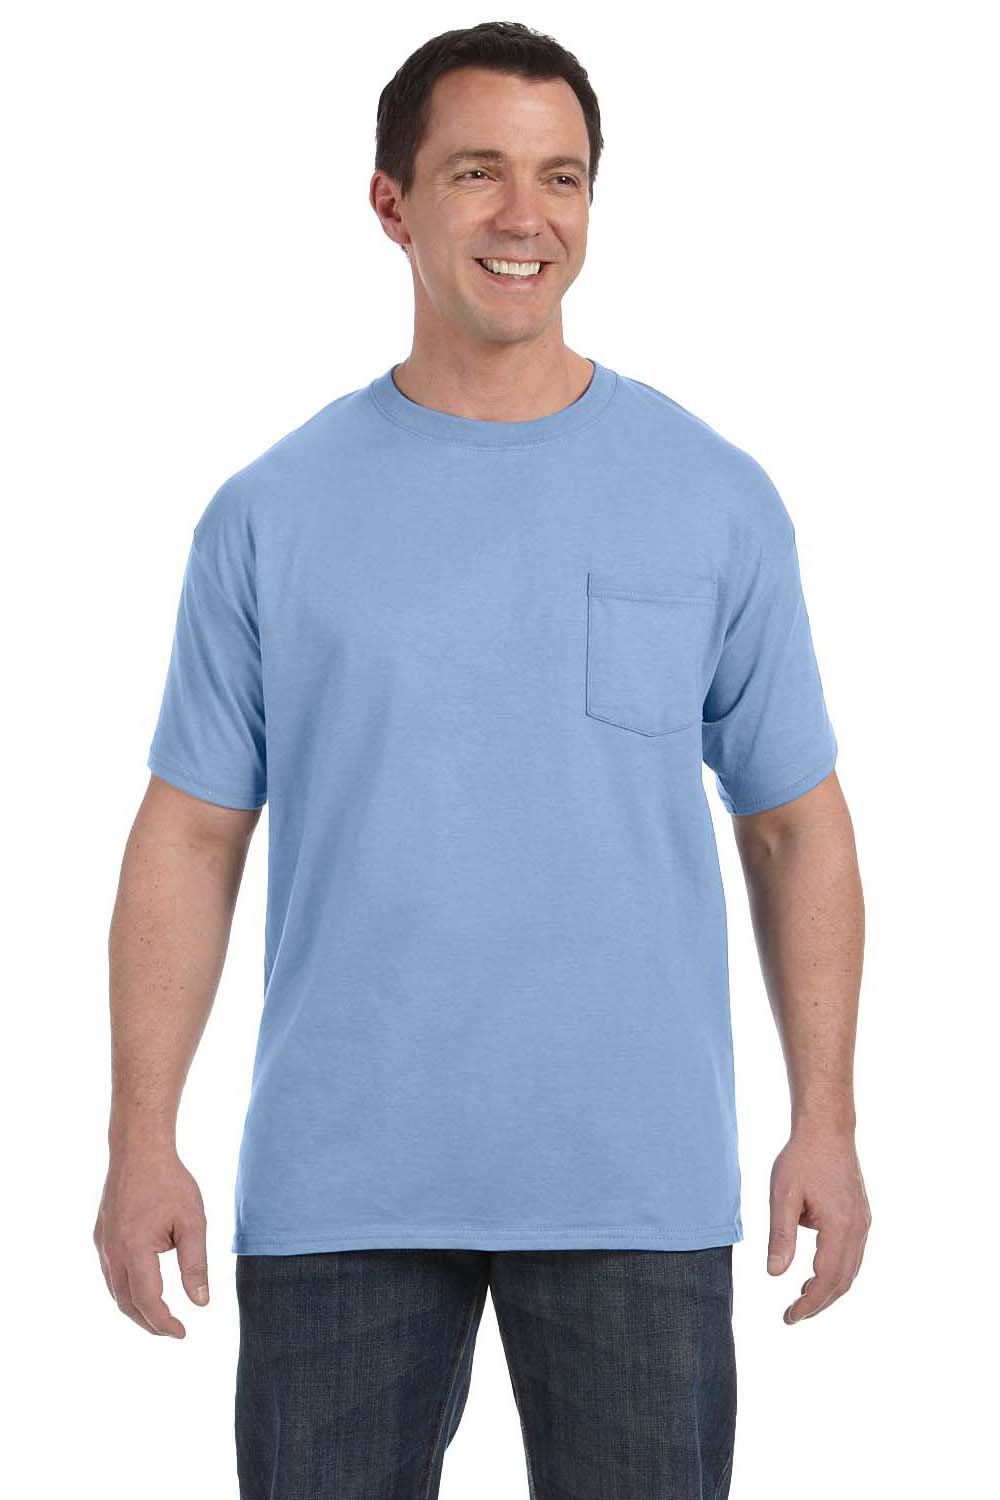 Hanes H5590 Mens ComfortSoft Short Sleeve Crewneck T-Shirt w/ Pocket Light Blue Front